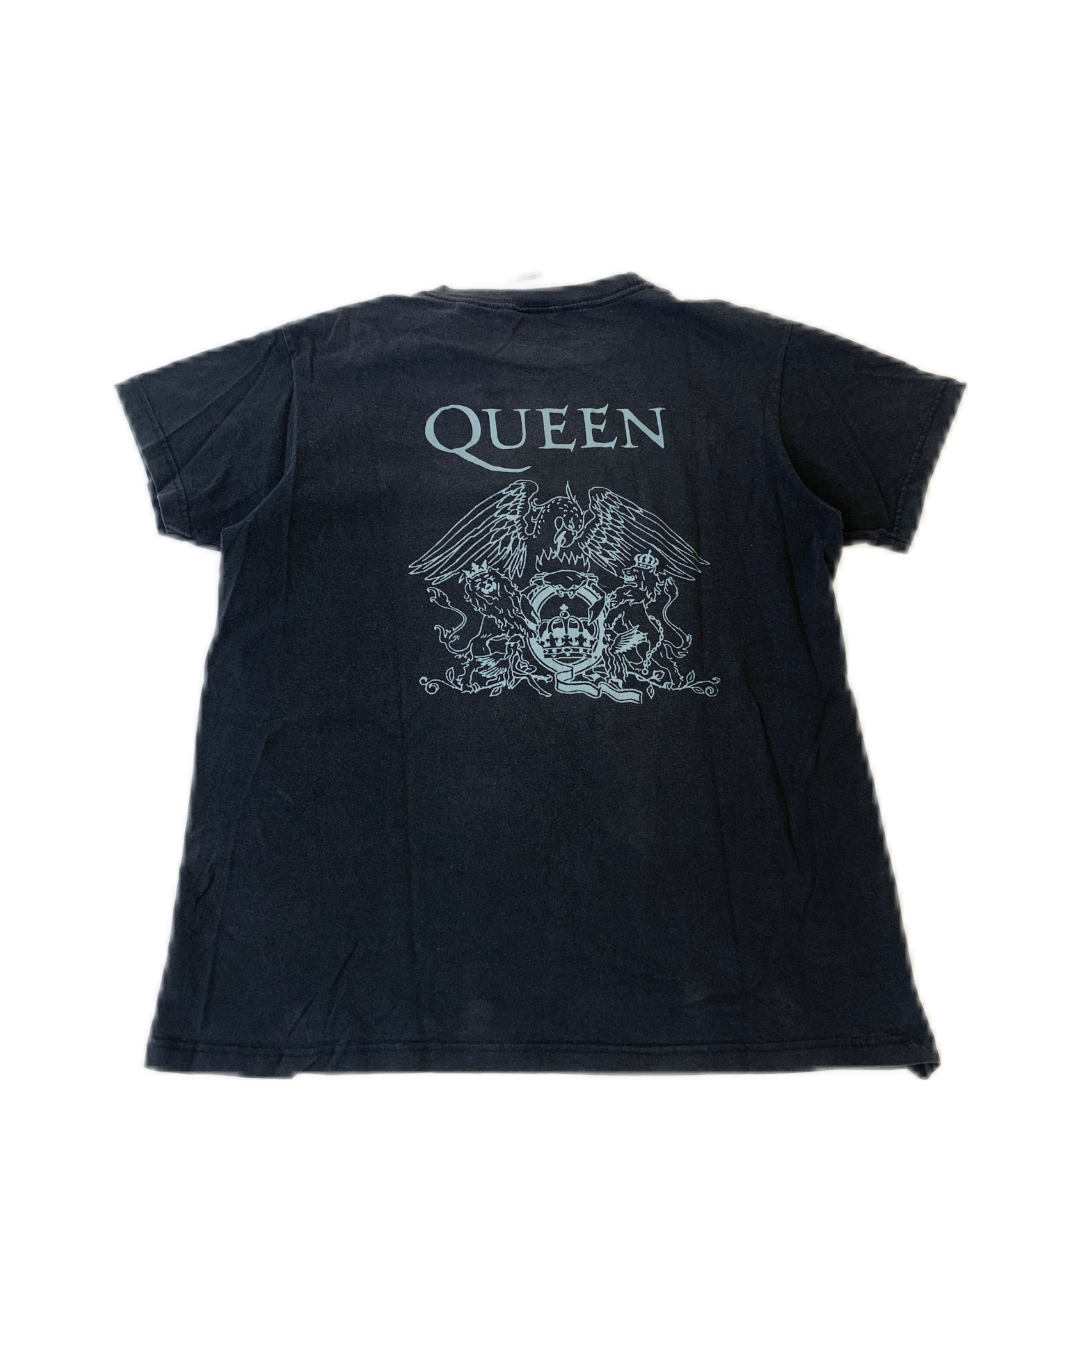 Queen Vintage T-Shirt - M